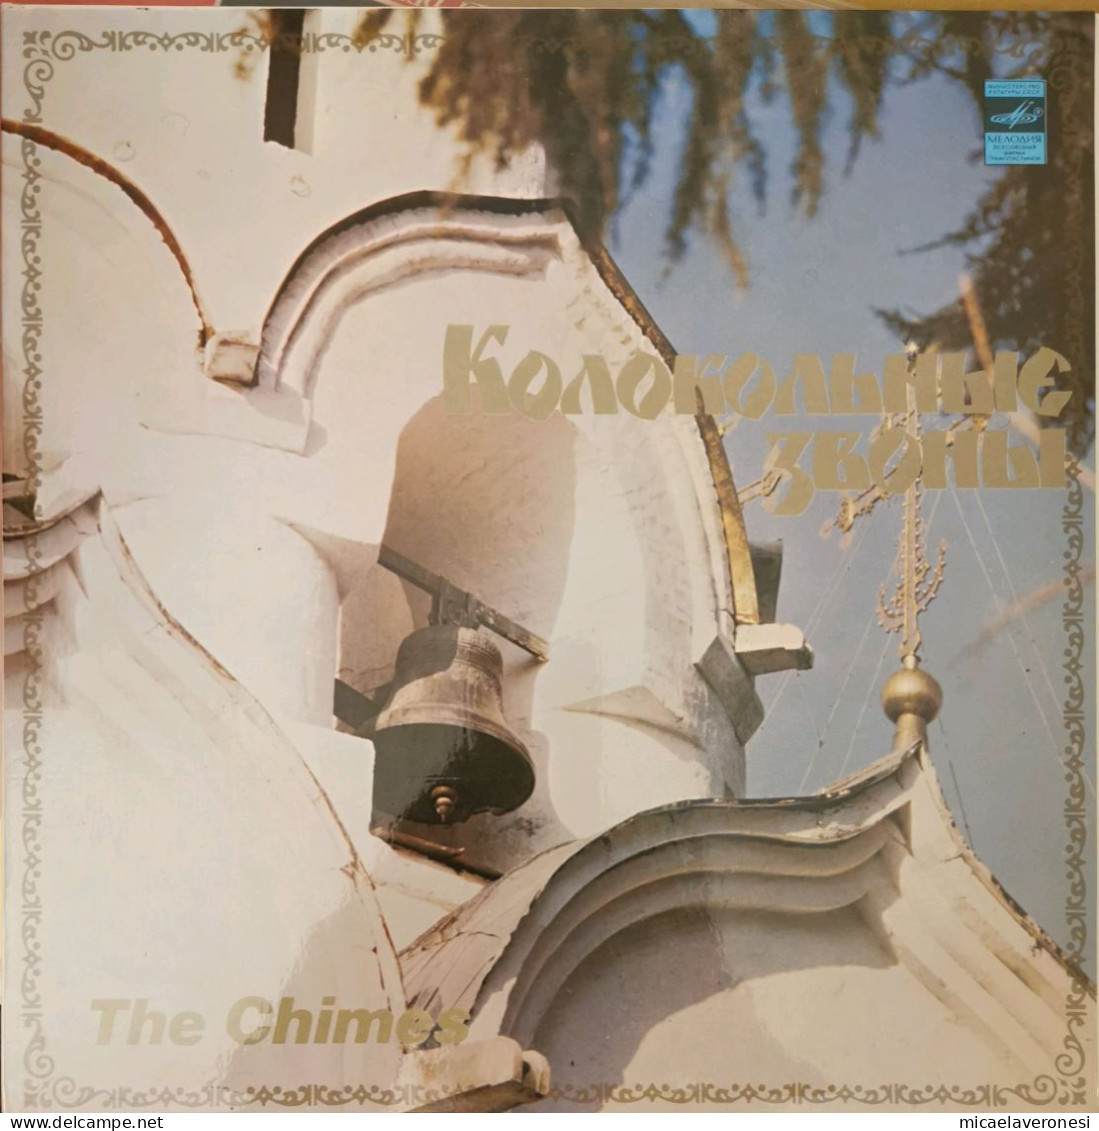 Колокольные Звоны = The Chimes - Disco Vinile - Gospel & Religiöser Gesang